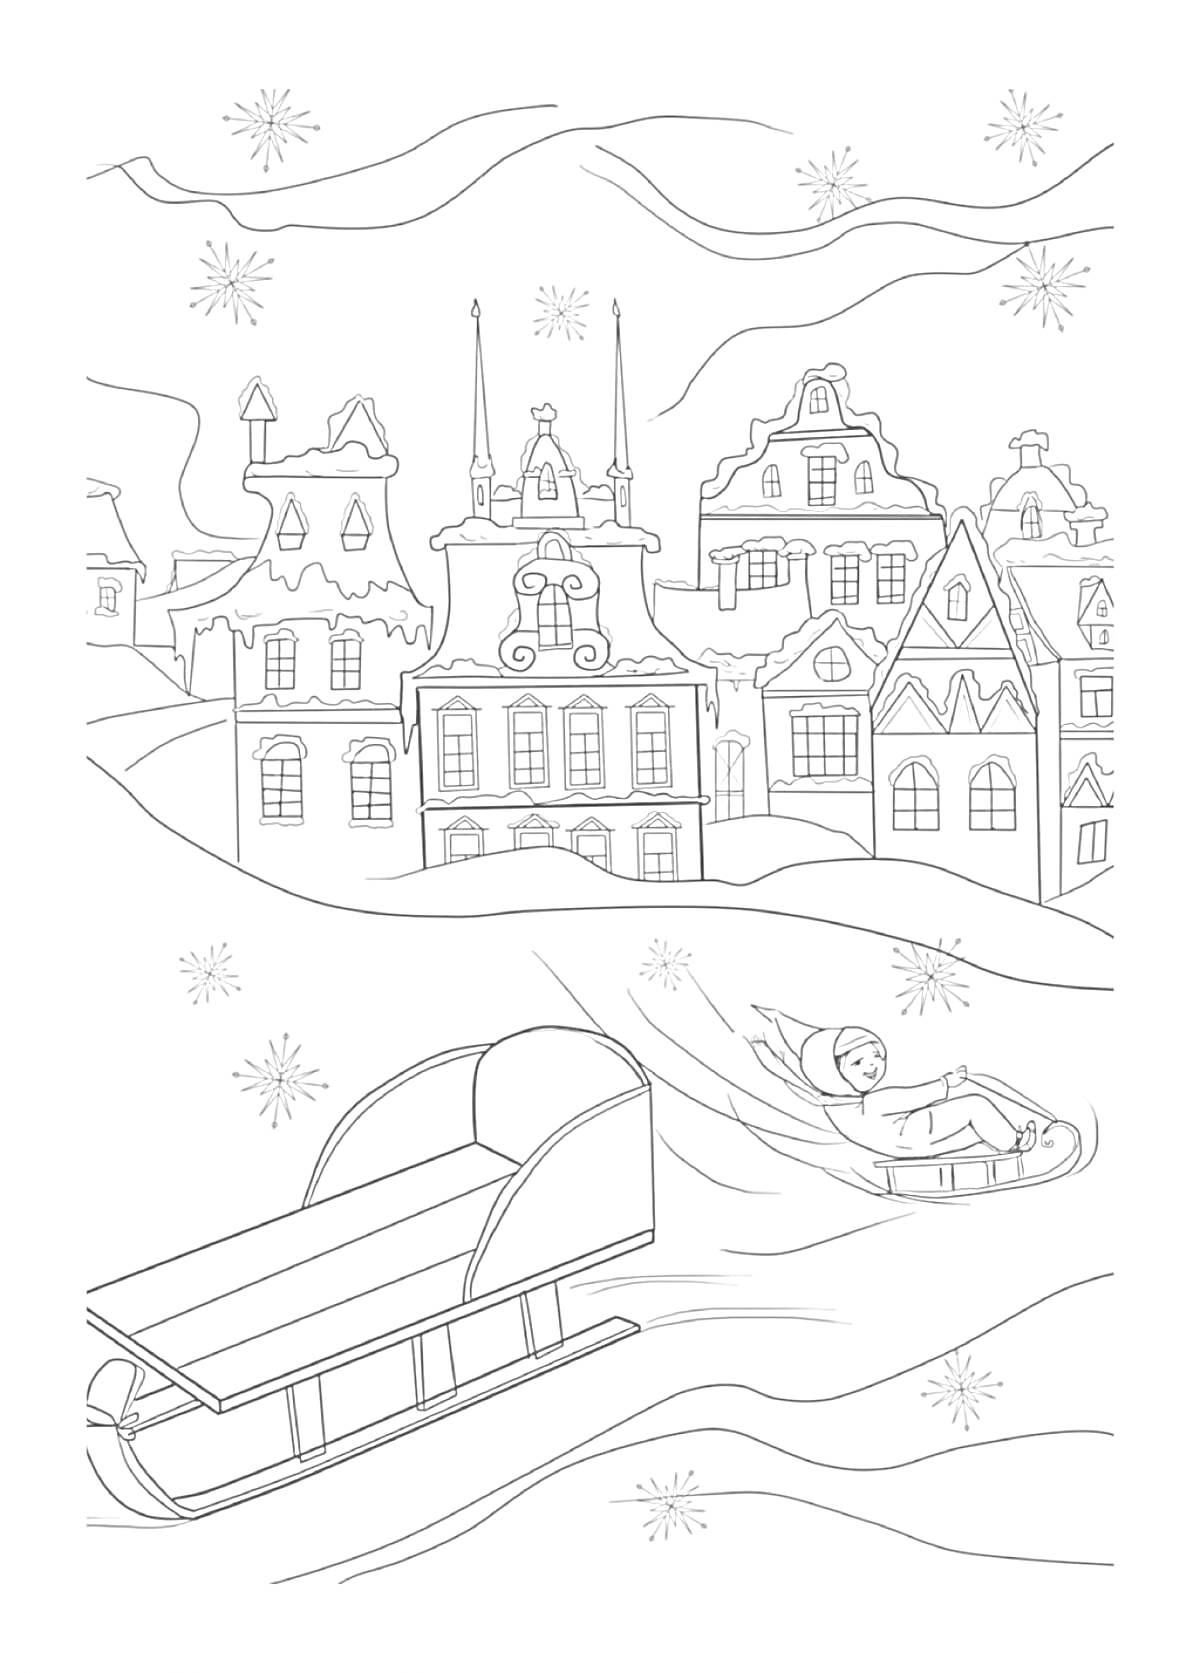 На раскраске изображено: Снег, Девочка, Снежинки, Холмы, Уют, Зимняя сказка, Дом, Сани